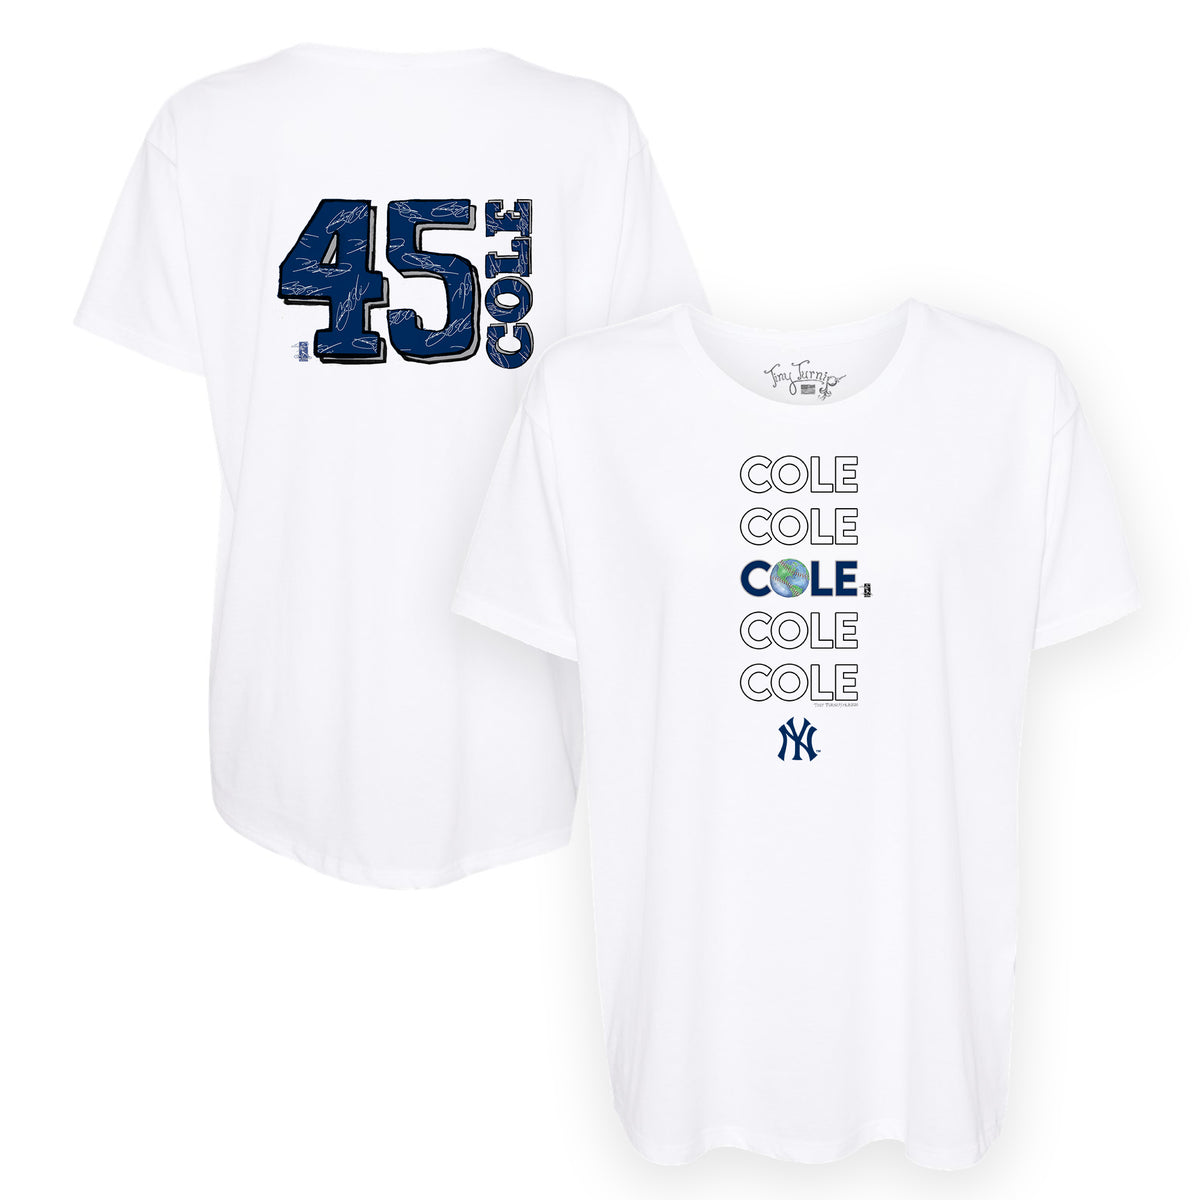 Youth New York Yankees Navy/White Tie-Dye Throwback T-Shirt